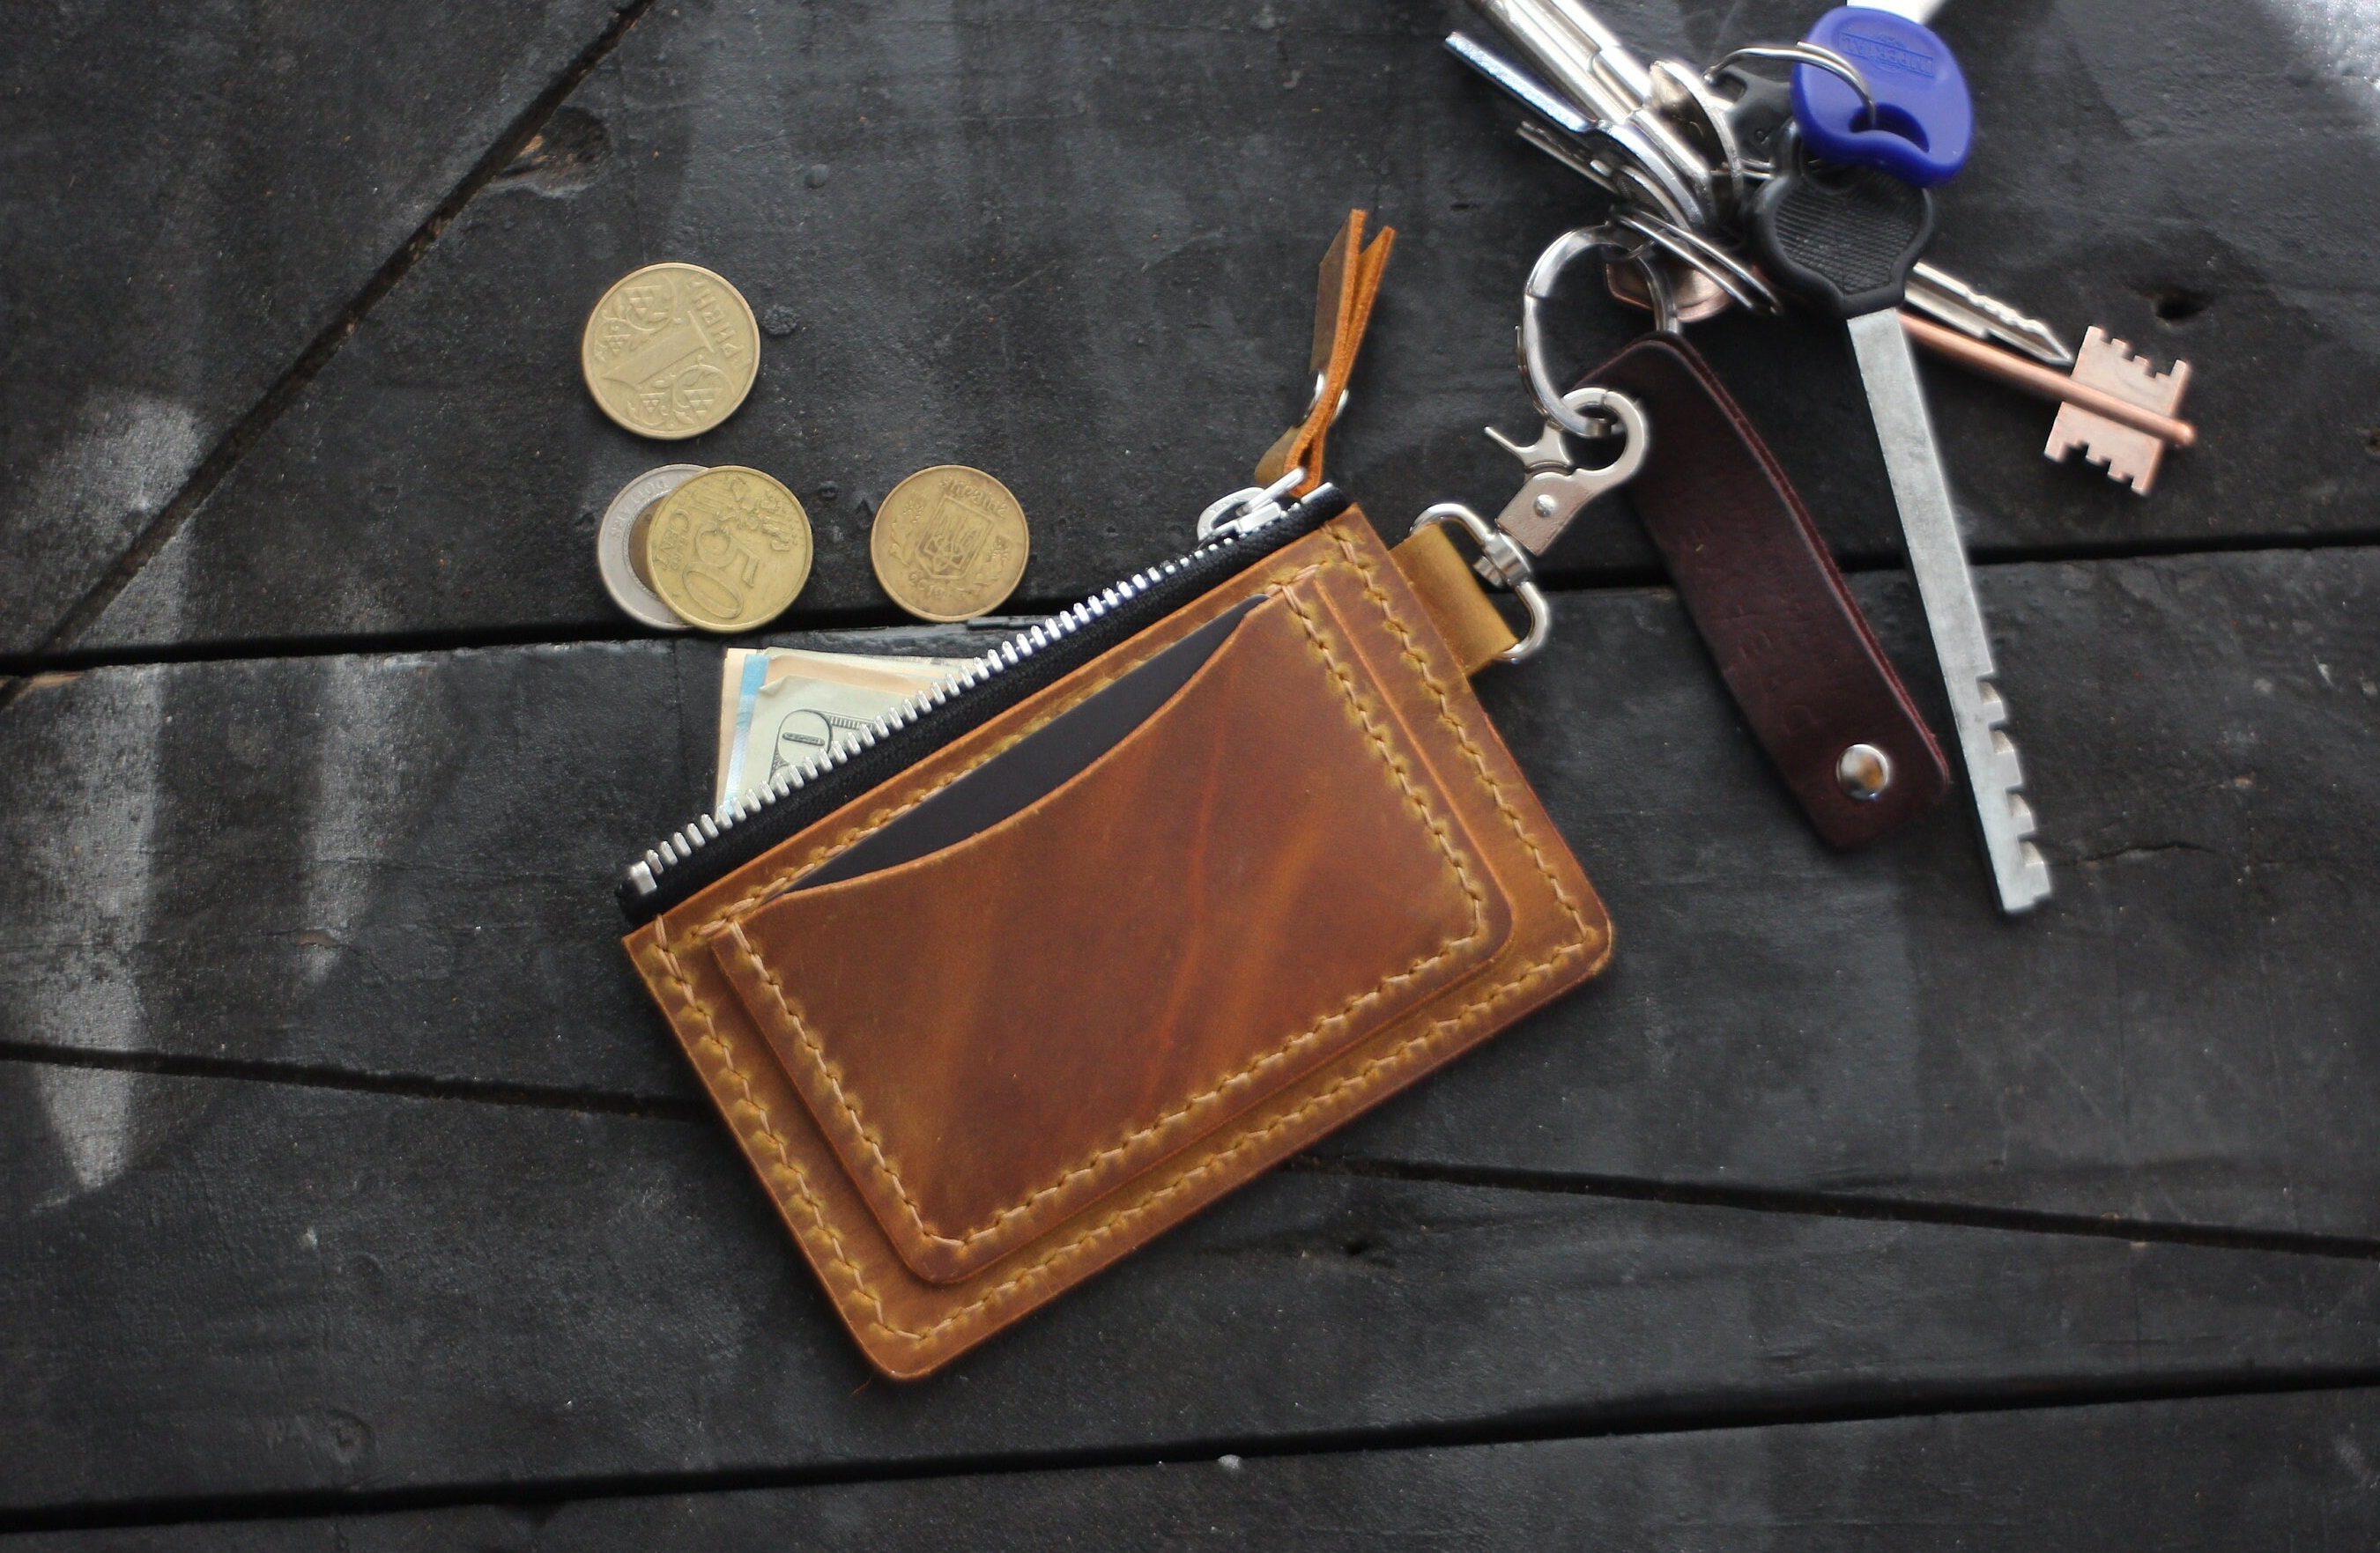 KNGITRYI Keychain Wallet,Wristlet Keychain With Wallet Slim RFID Credit  Card Holder Wristlet Zip Id Case Wallet Small Compact Leather  Wallet,Wristlet